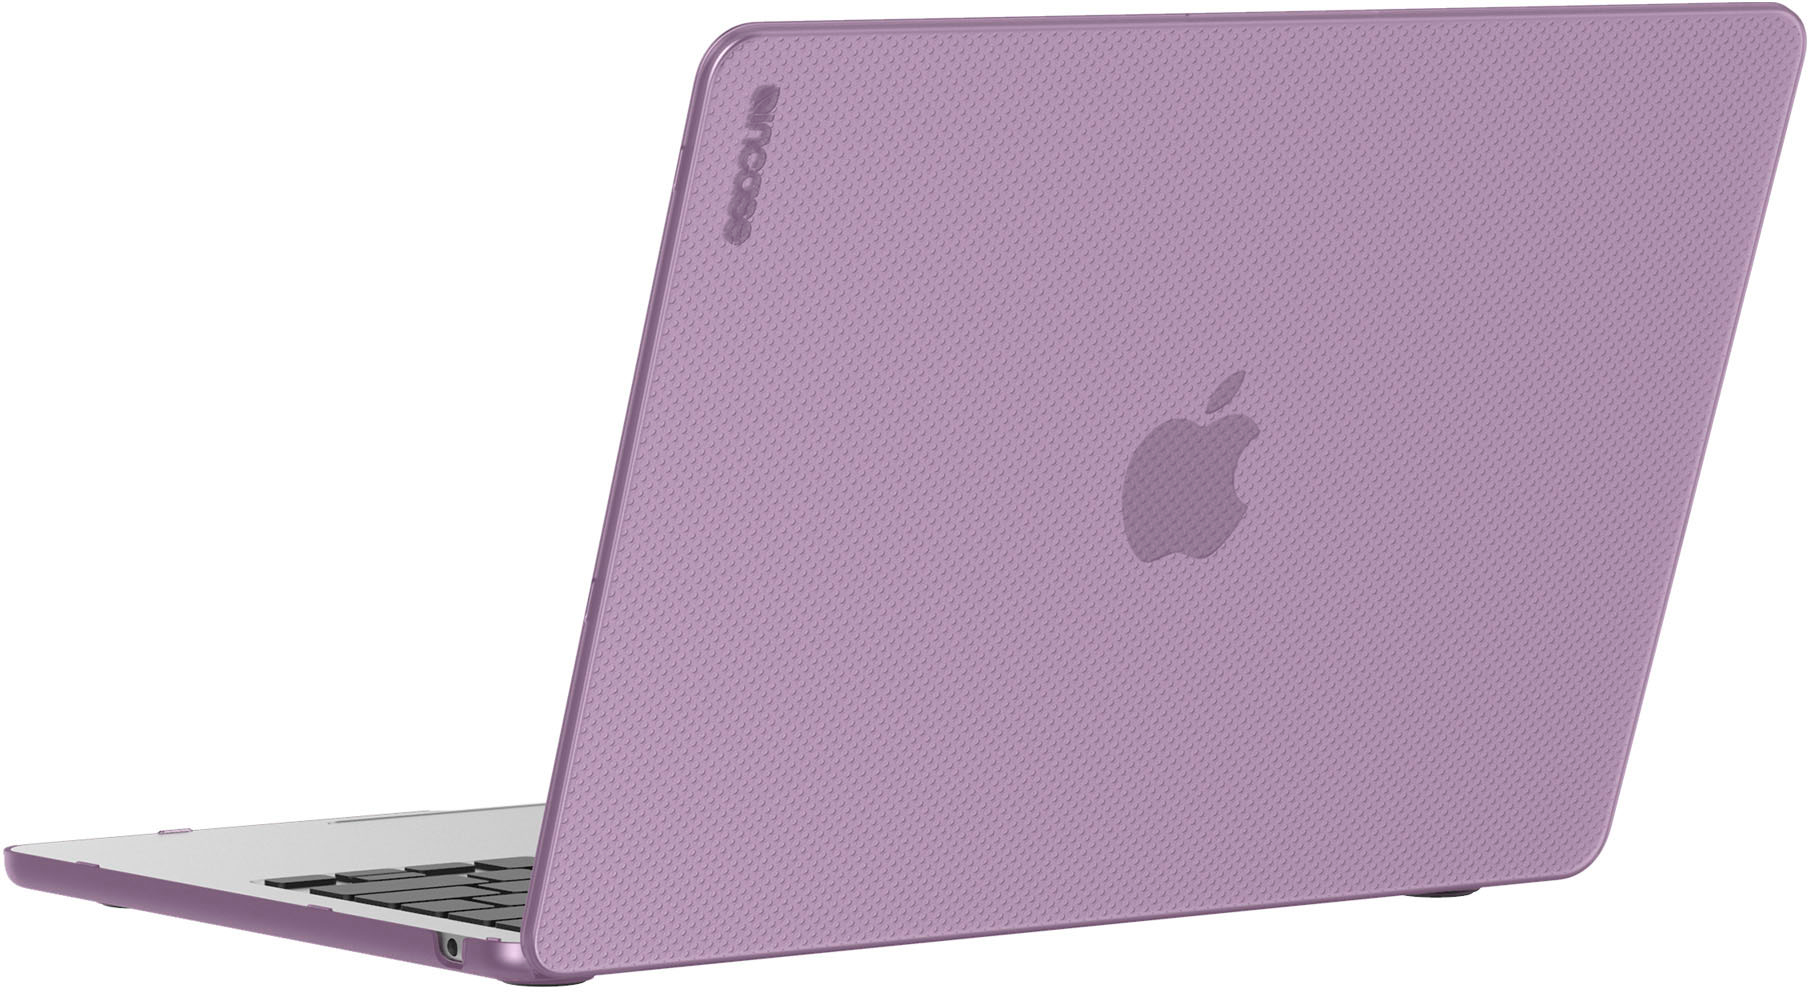 Coque de protection inCASE HardShell pour MacBook Air (Intel – RMD (Store)